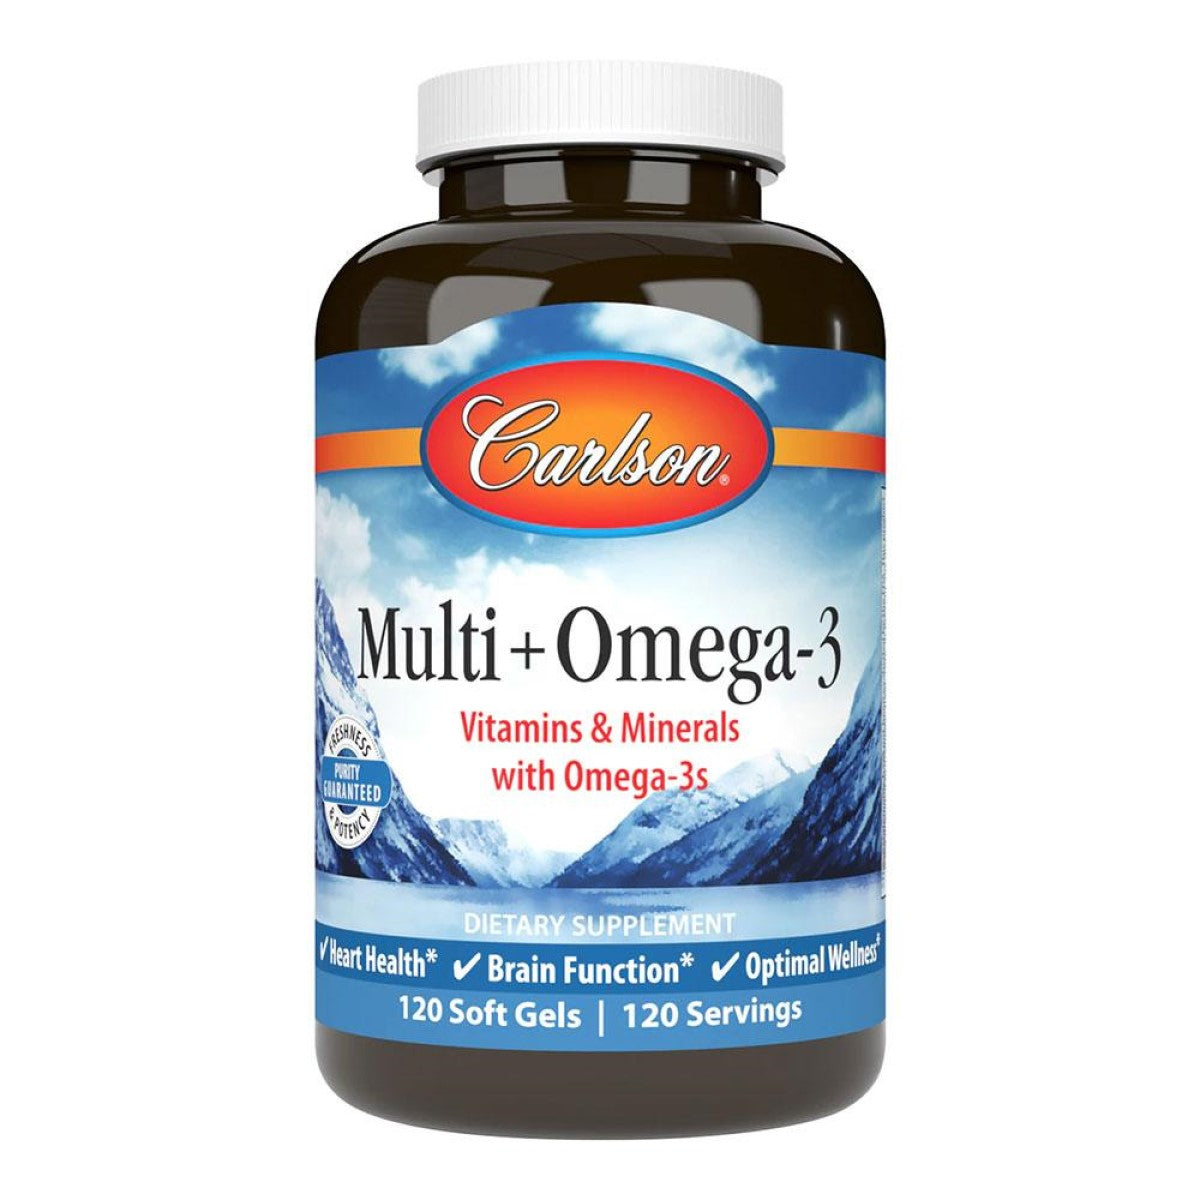 Primary image of Multi + Omega-3 Soft Gels